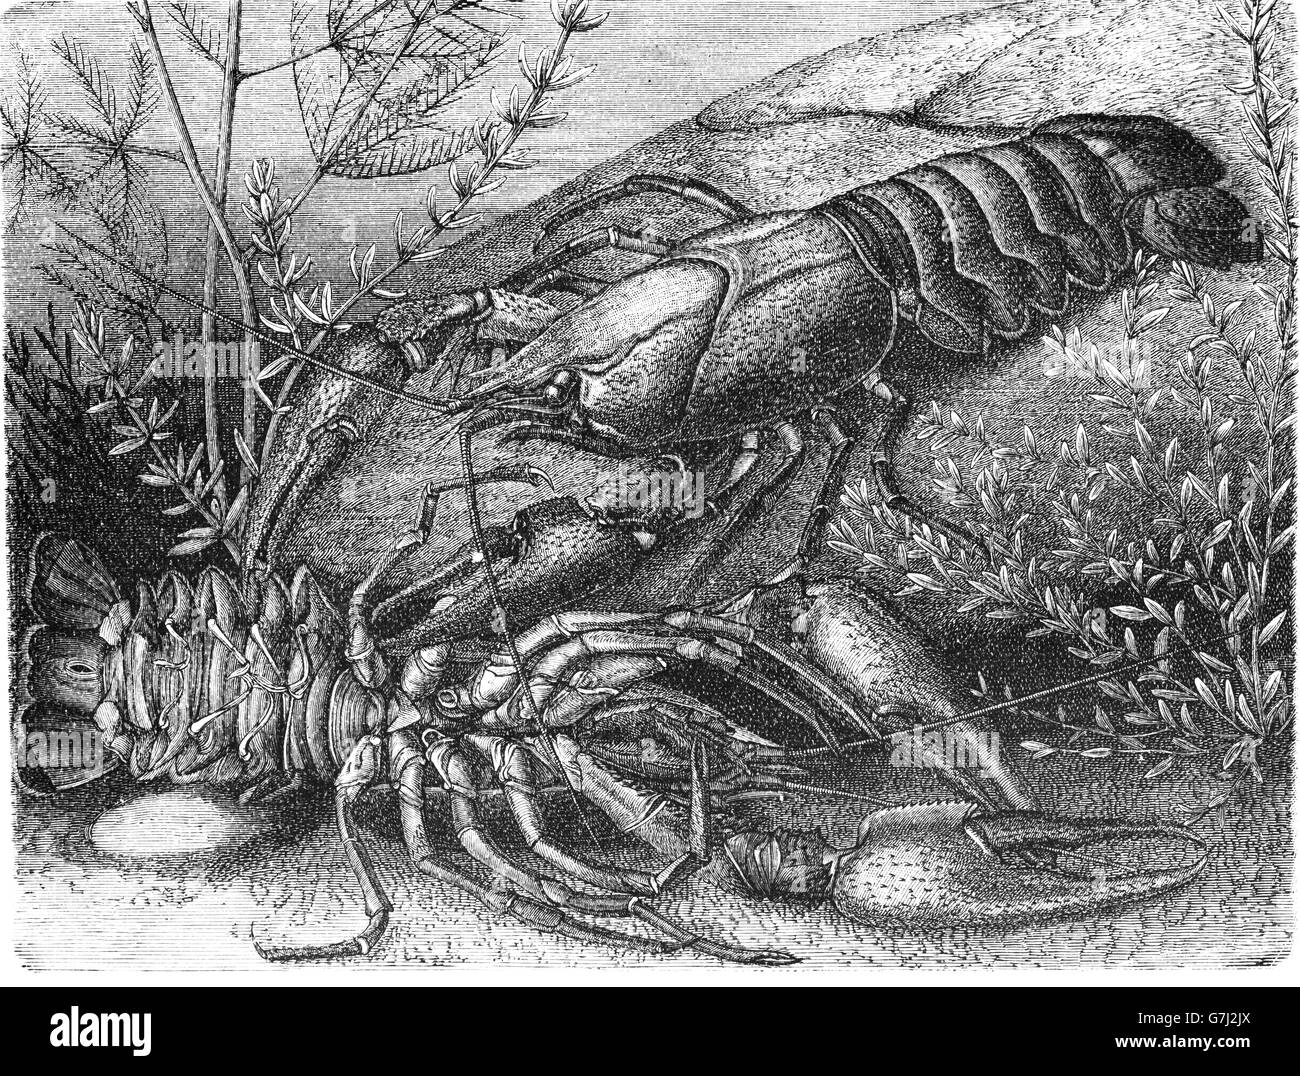 Astacus astacus, European crayfish, noble crayfish, illustration from book dated 1904 Stock Photo